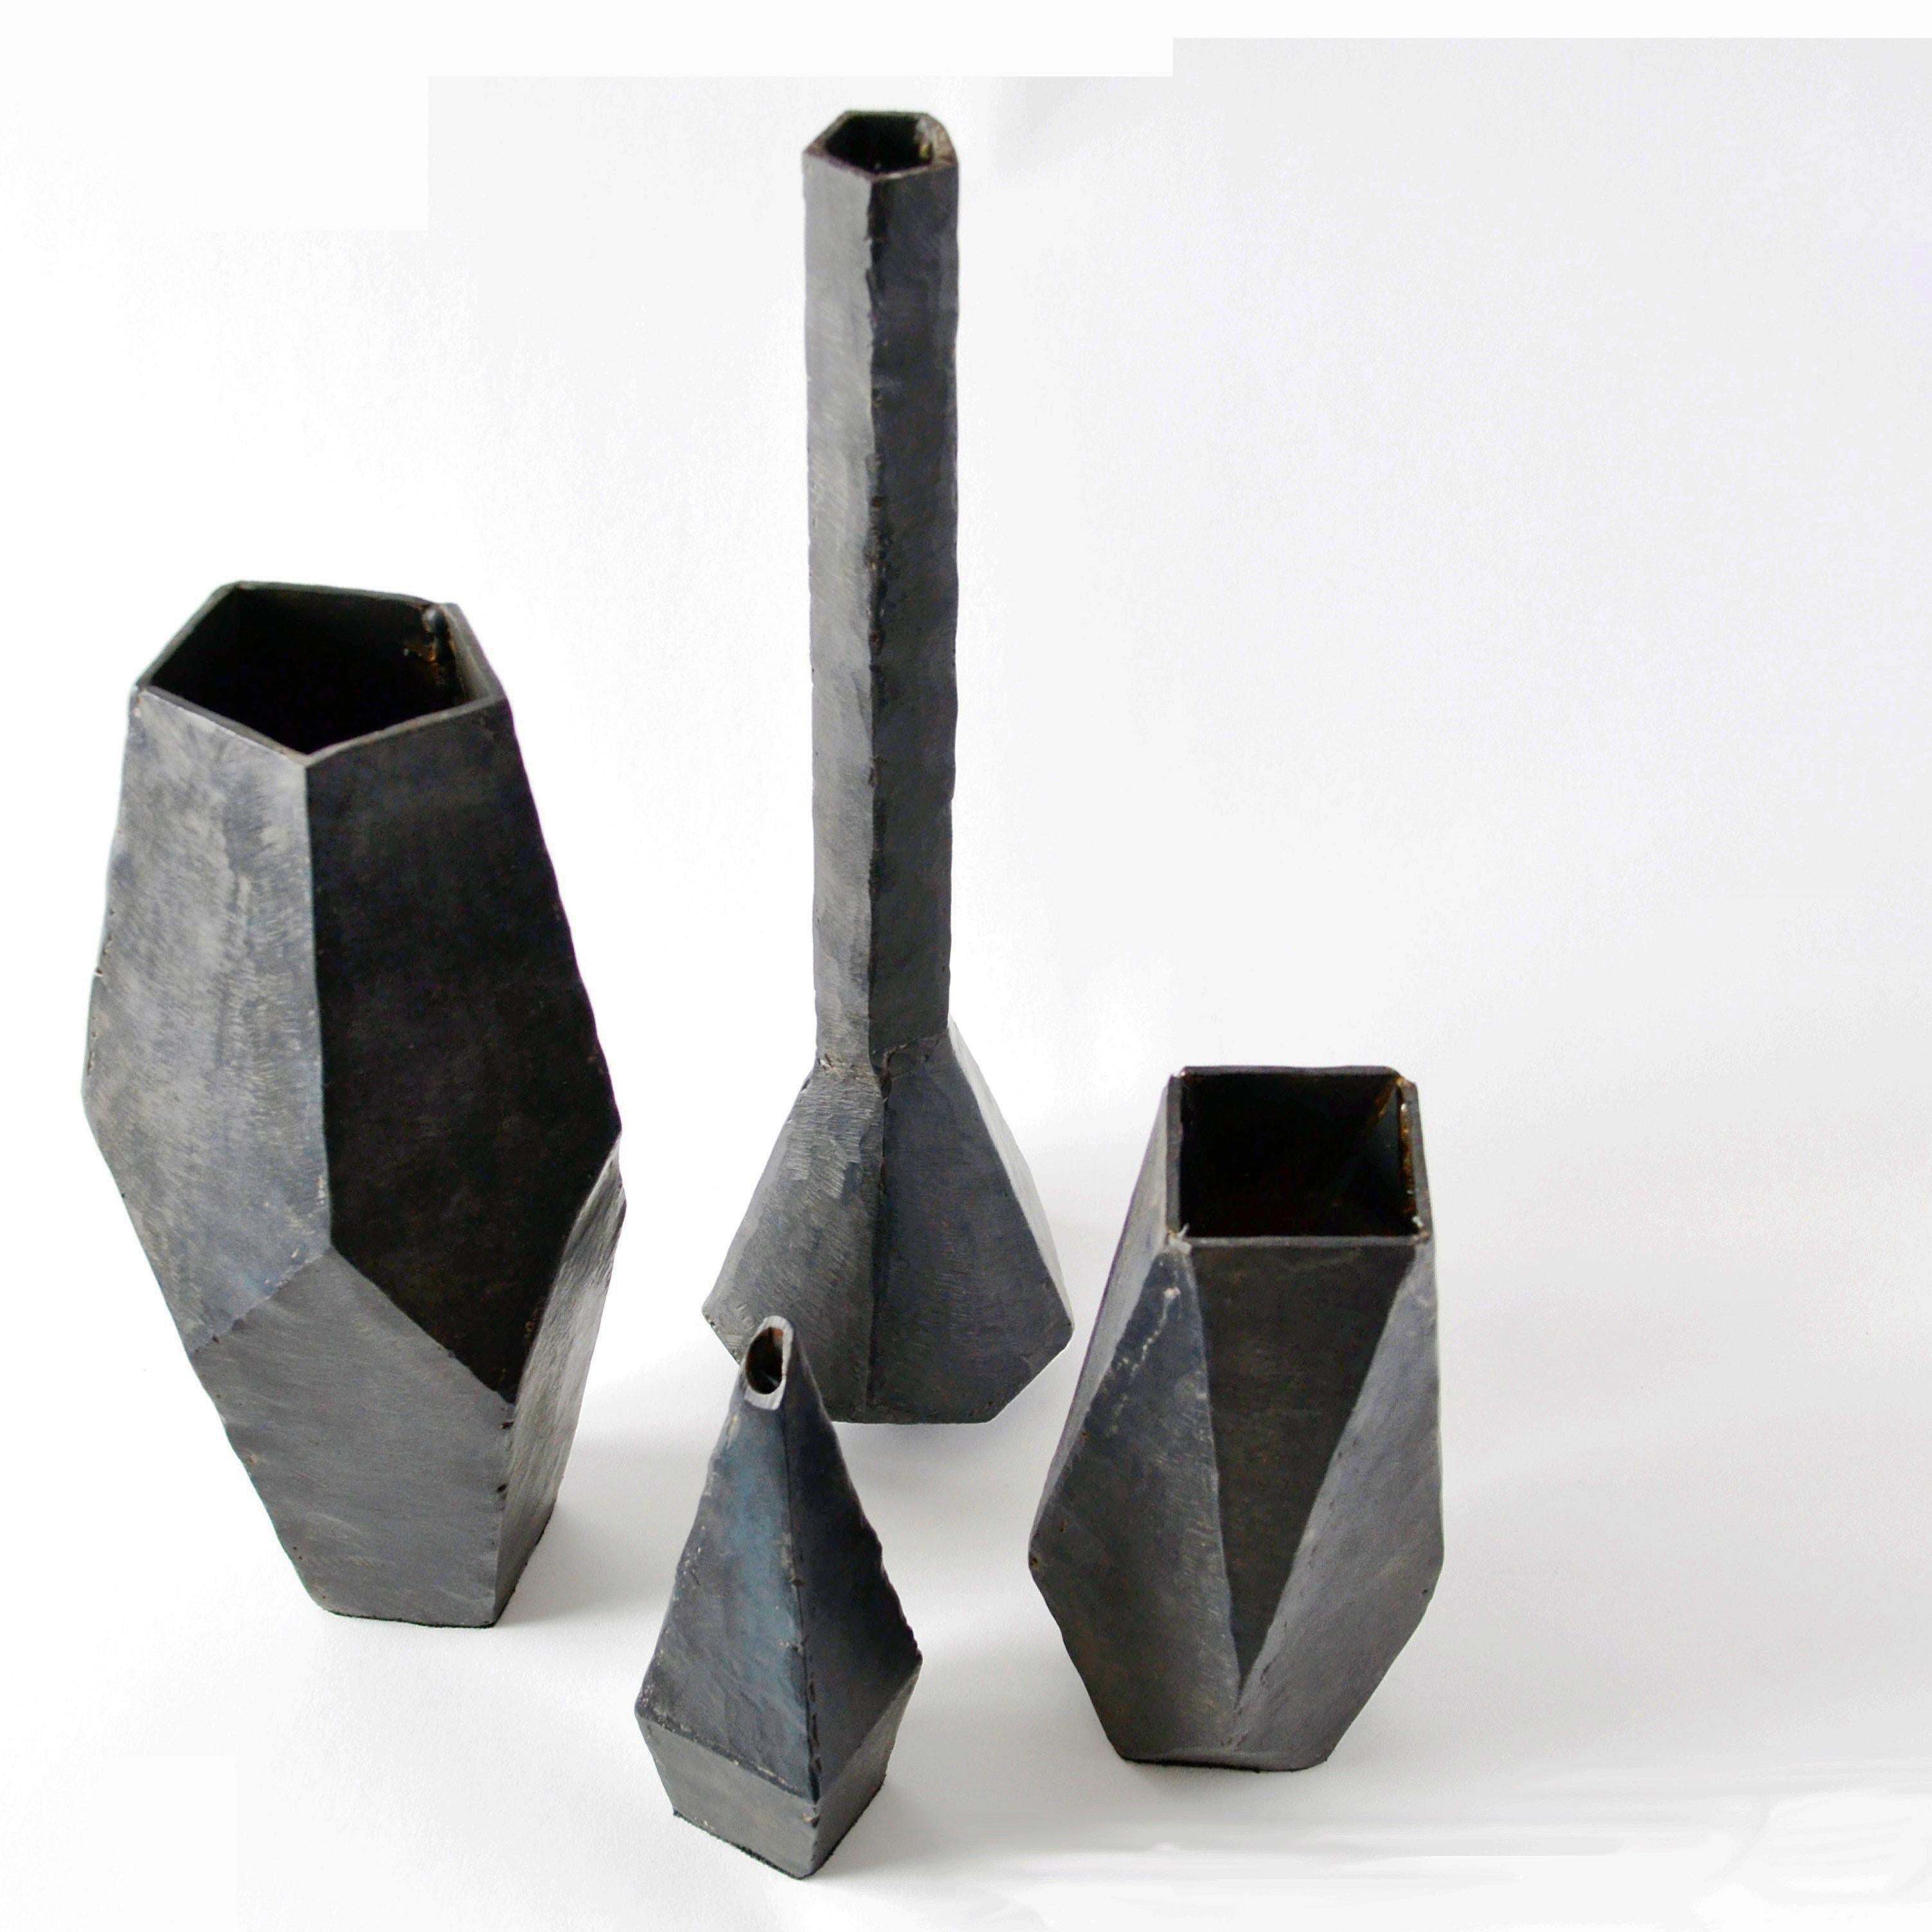 Carved Geometric Vessel Sculpture Handmade by J.M. Szymanski, Blackened and Waxed Iron